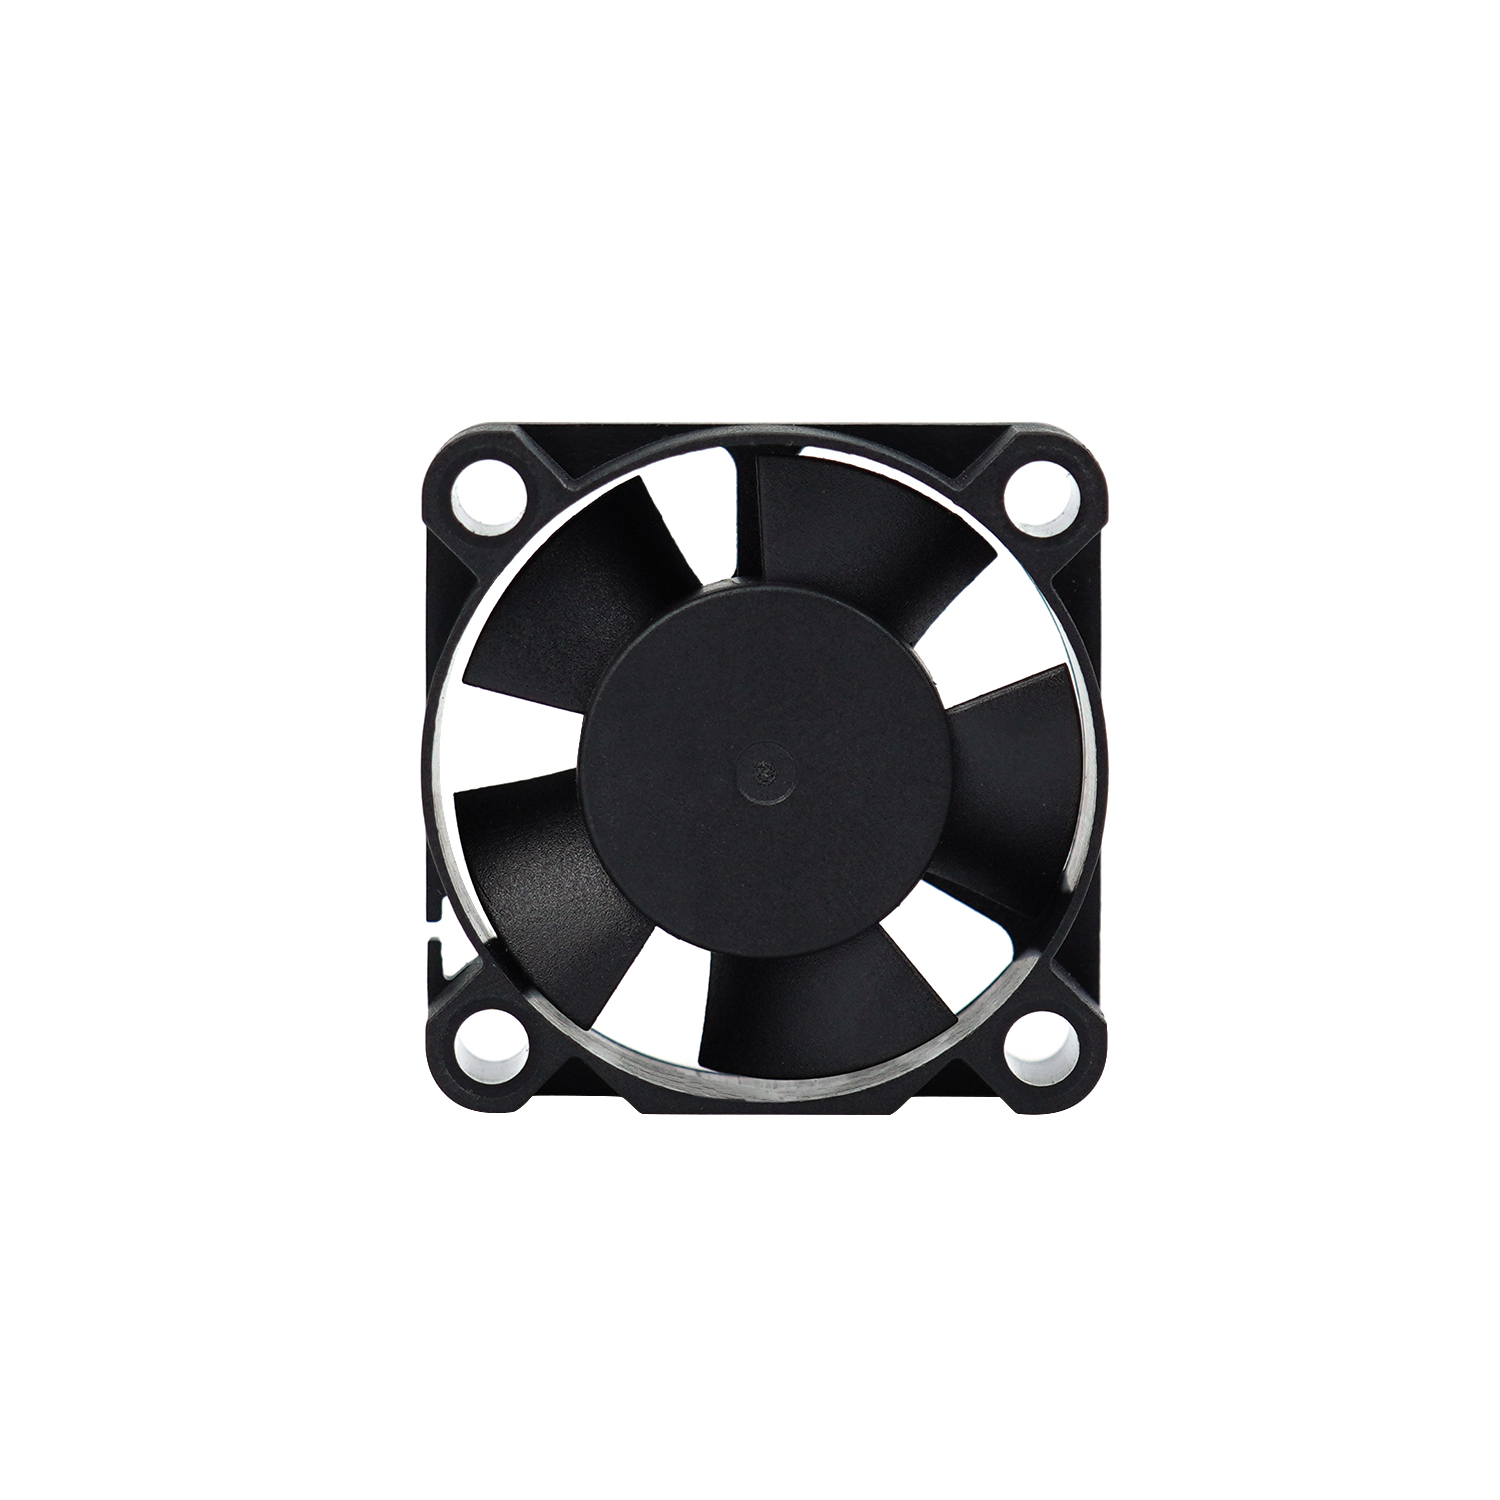 industrial cooling fan 3010 30mm 30x30 small fan double ball bearing 12 volt cooling fans